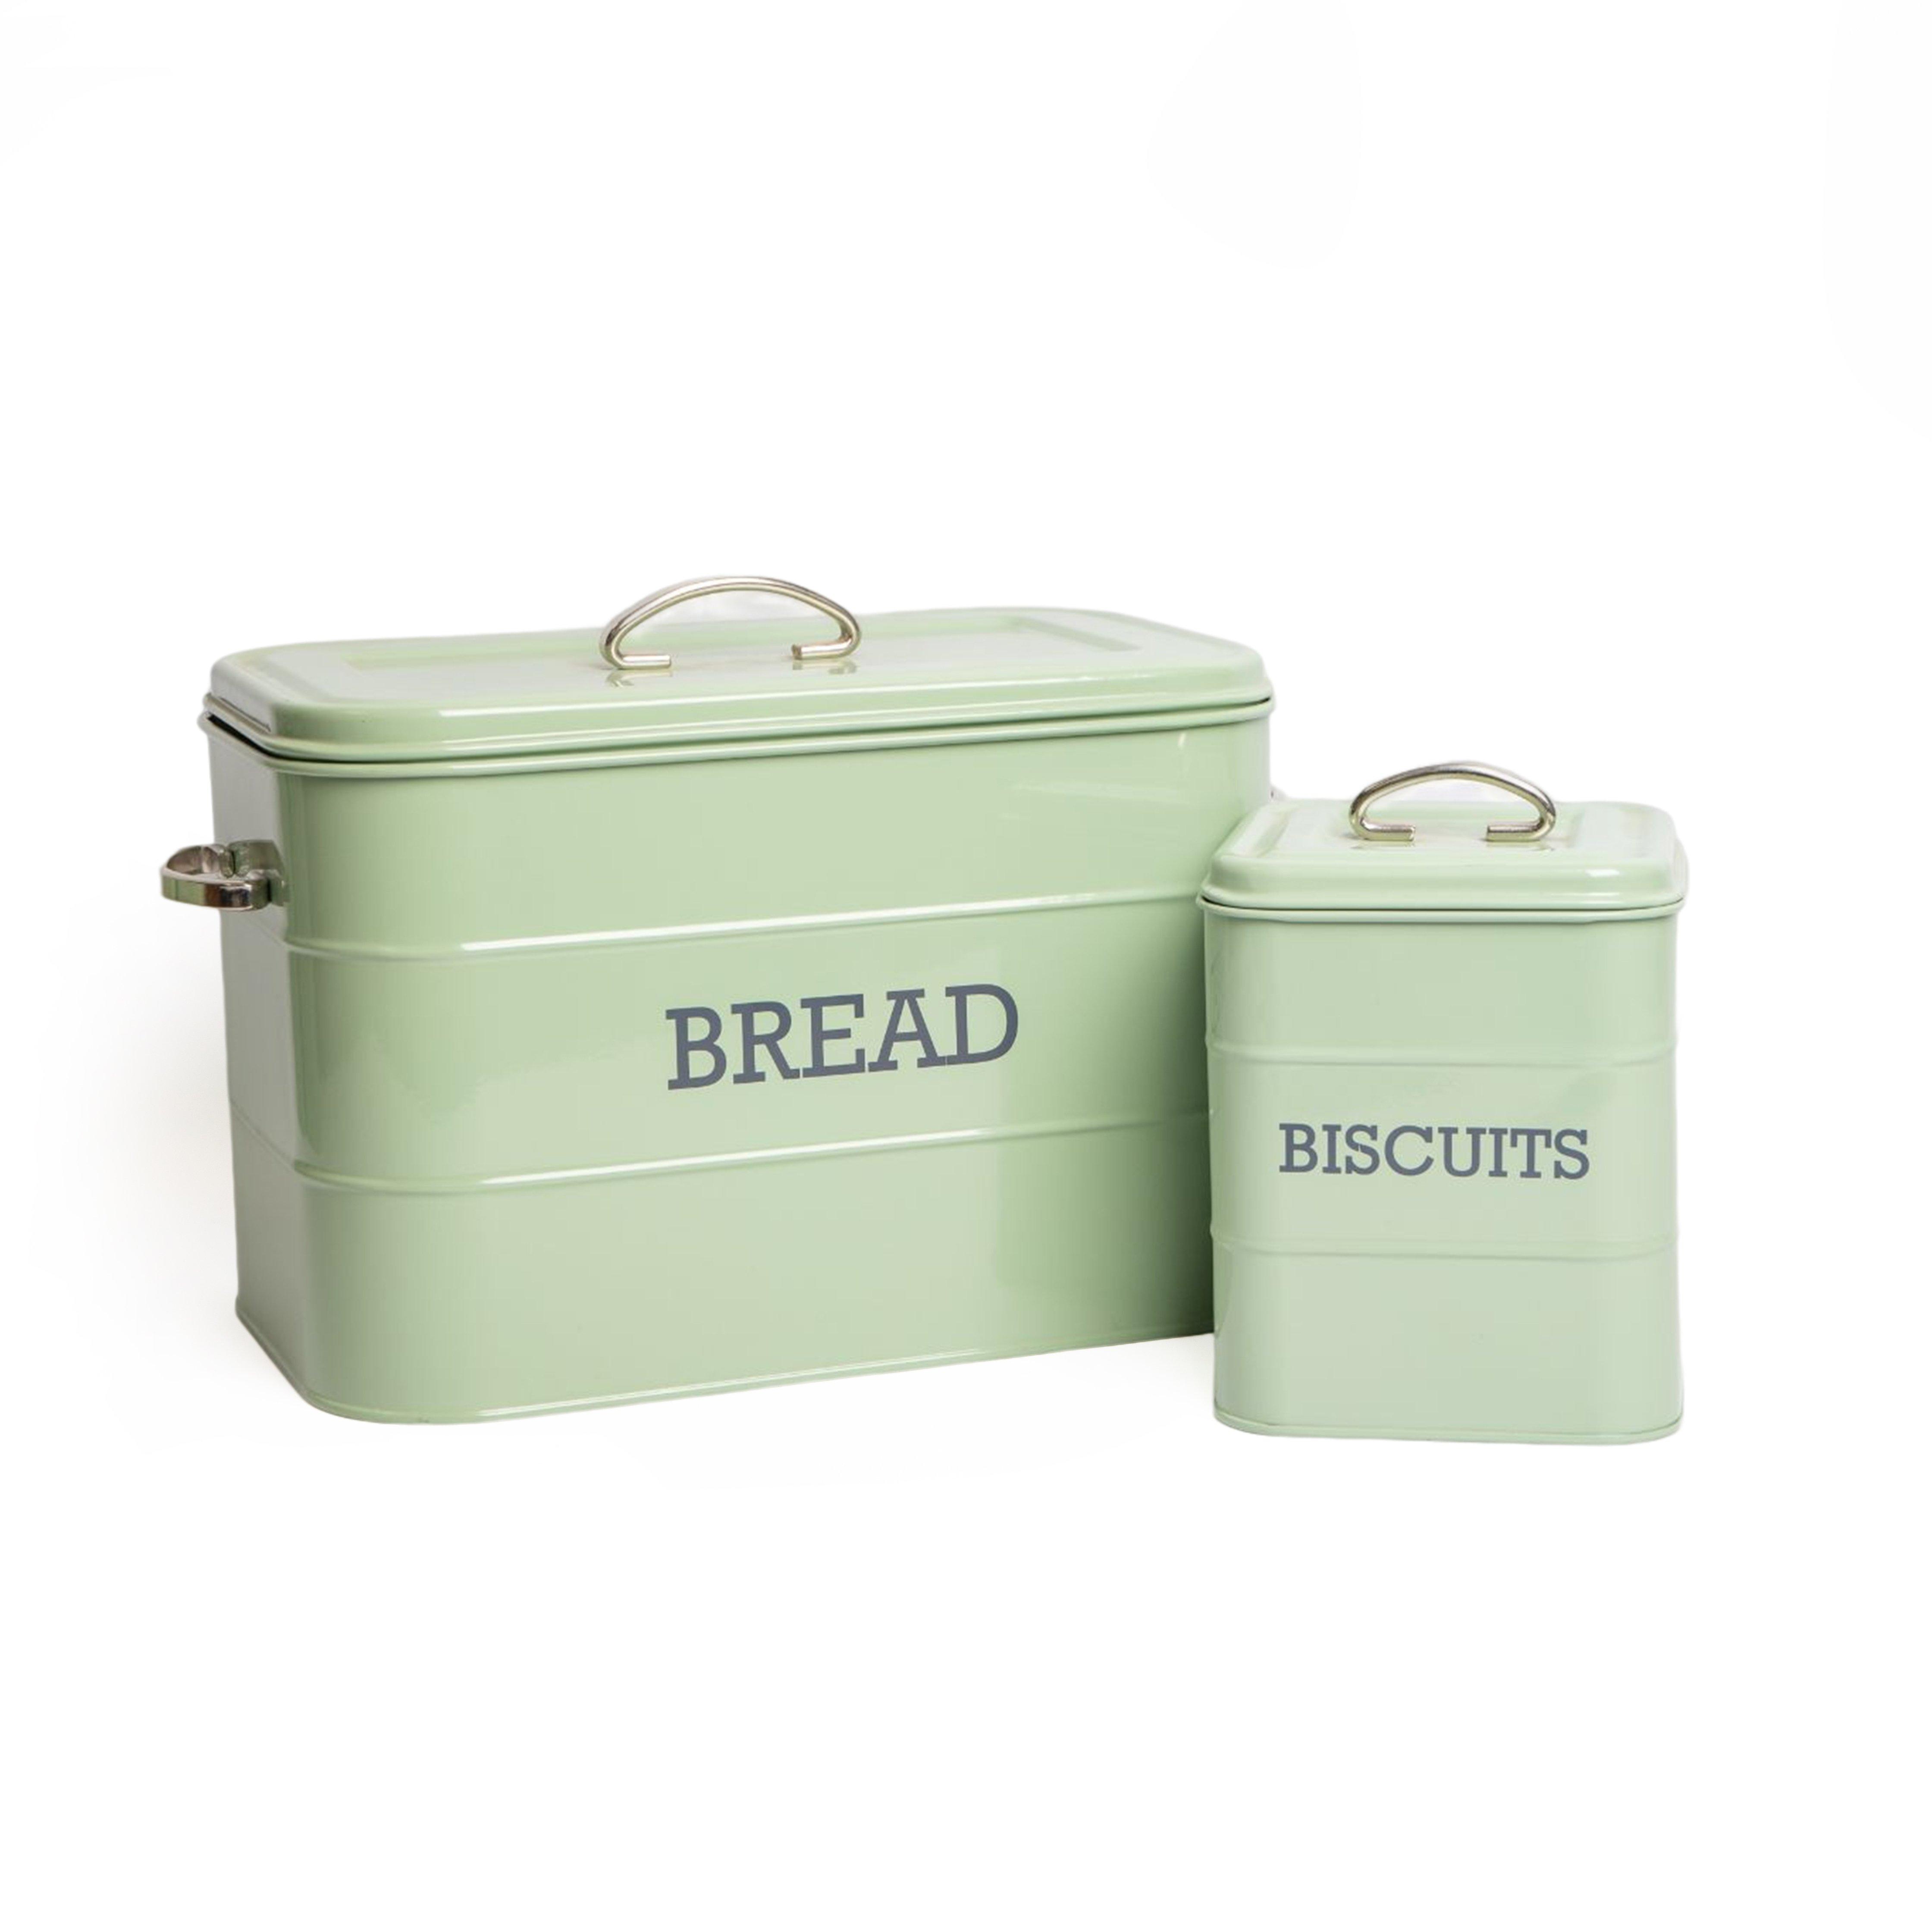 2pc English Sage Green Kitchen Storage Set with Bread Bin and Biscuit Tin